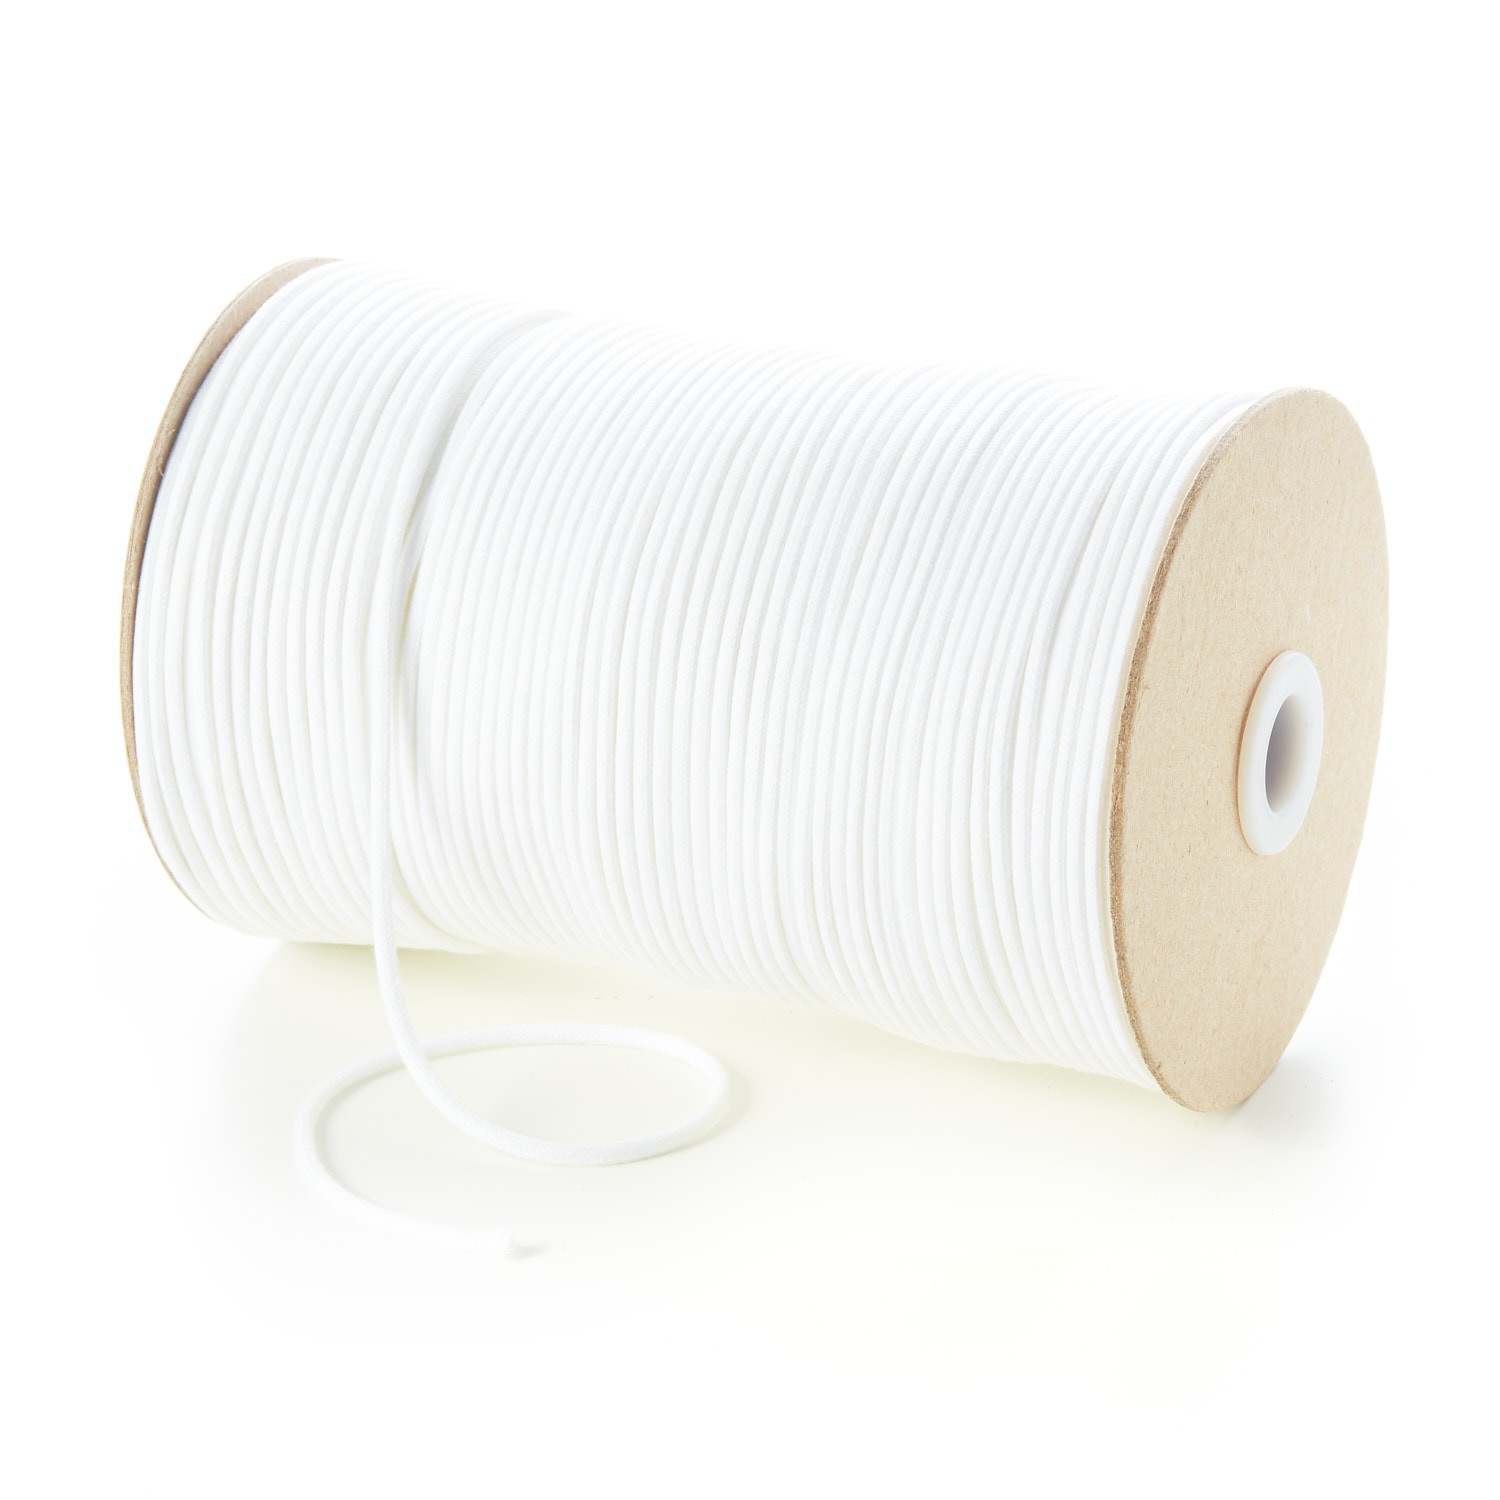 C250 2mm Thin Round Cotton Cord White Kalsi Cords